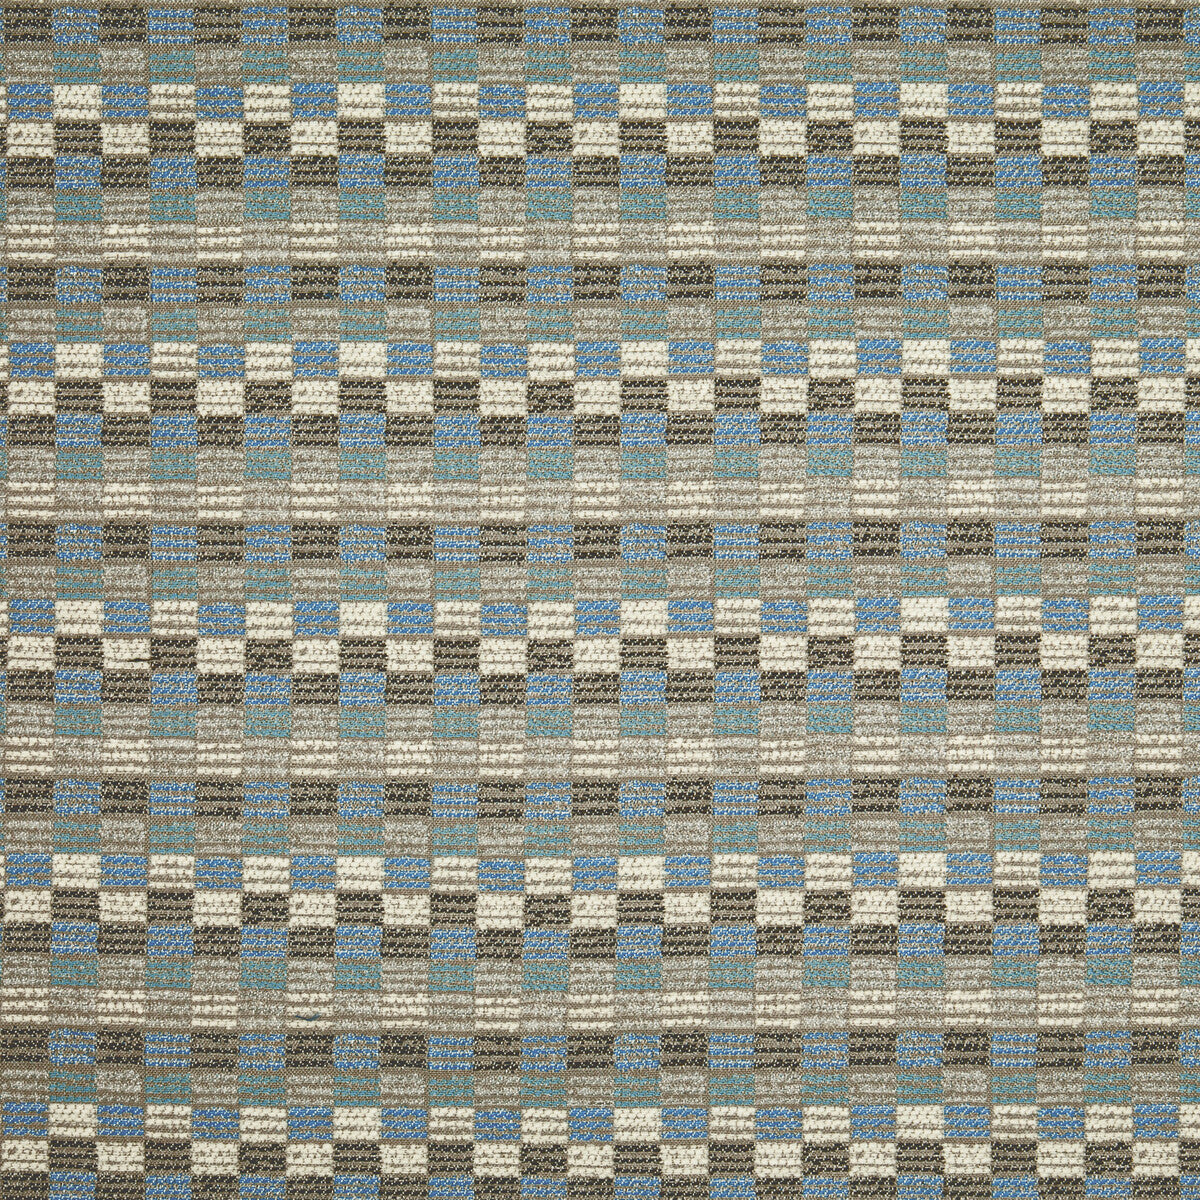 Lj Grw fabric - pattern 2019145.511.0 - by Lee Jofa Modern in the Kw Terra Firma III Indoor Outdoor collection